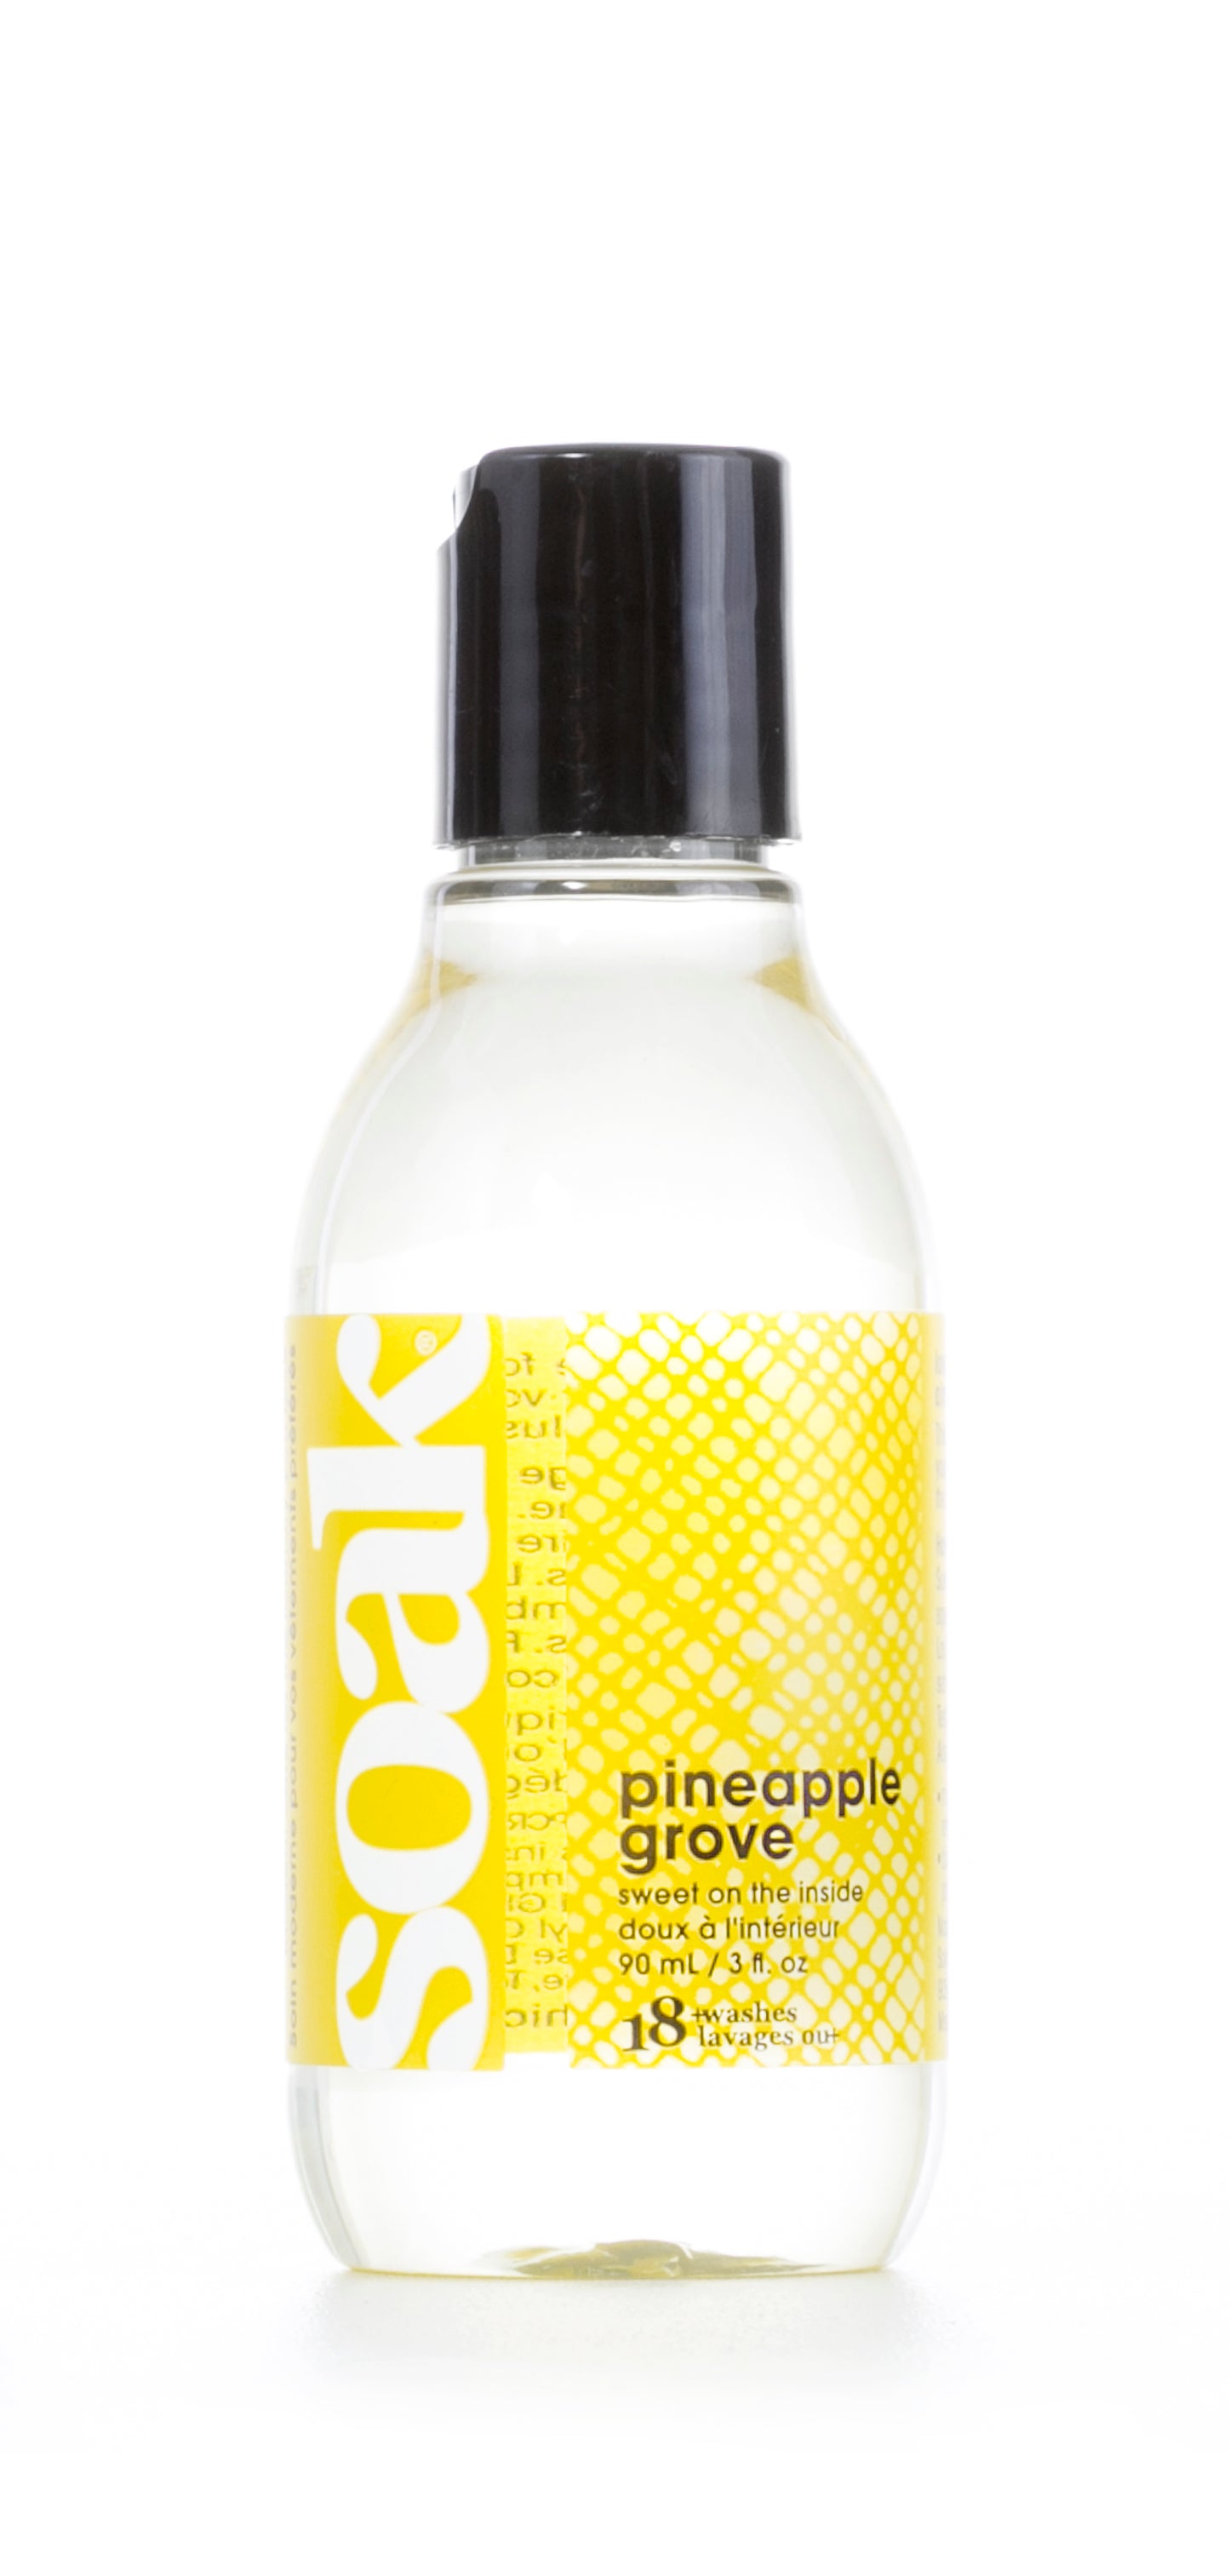 Soak Pineapple Grove 3oz bottle